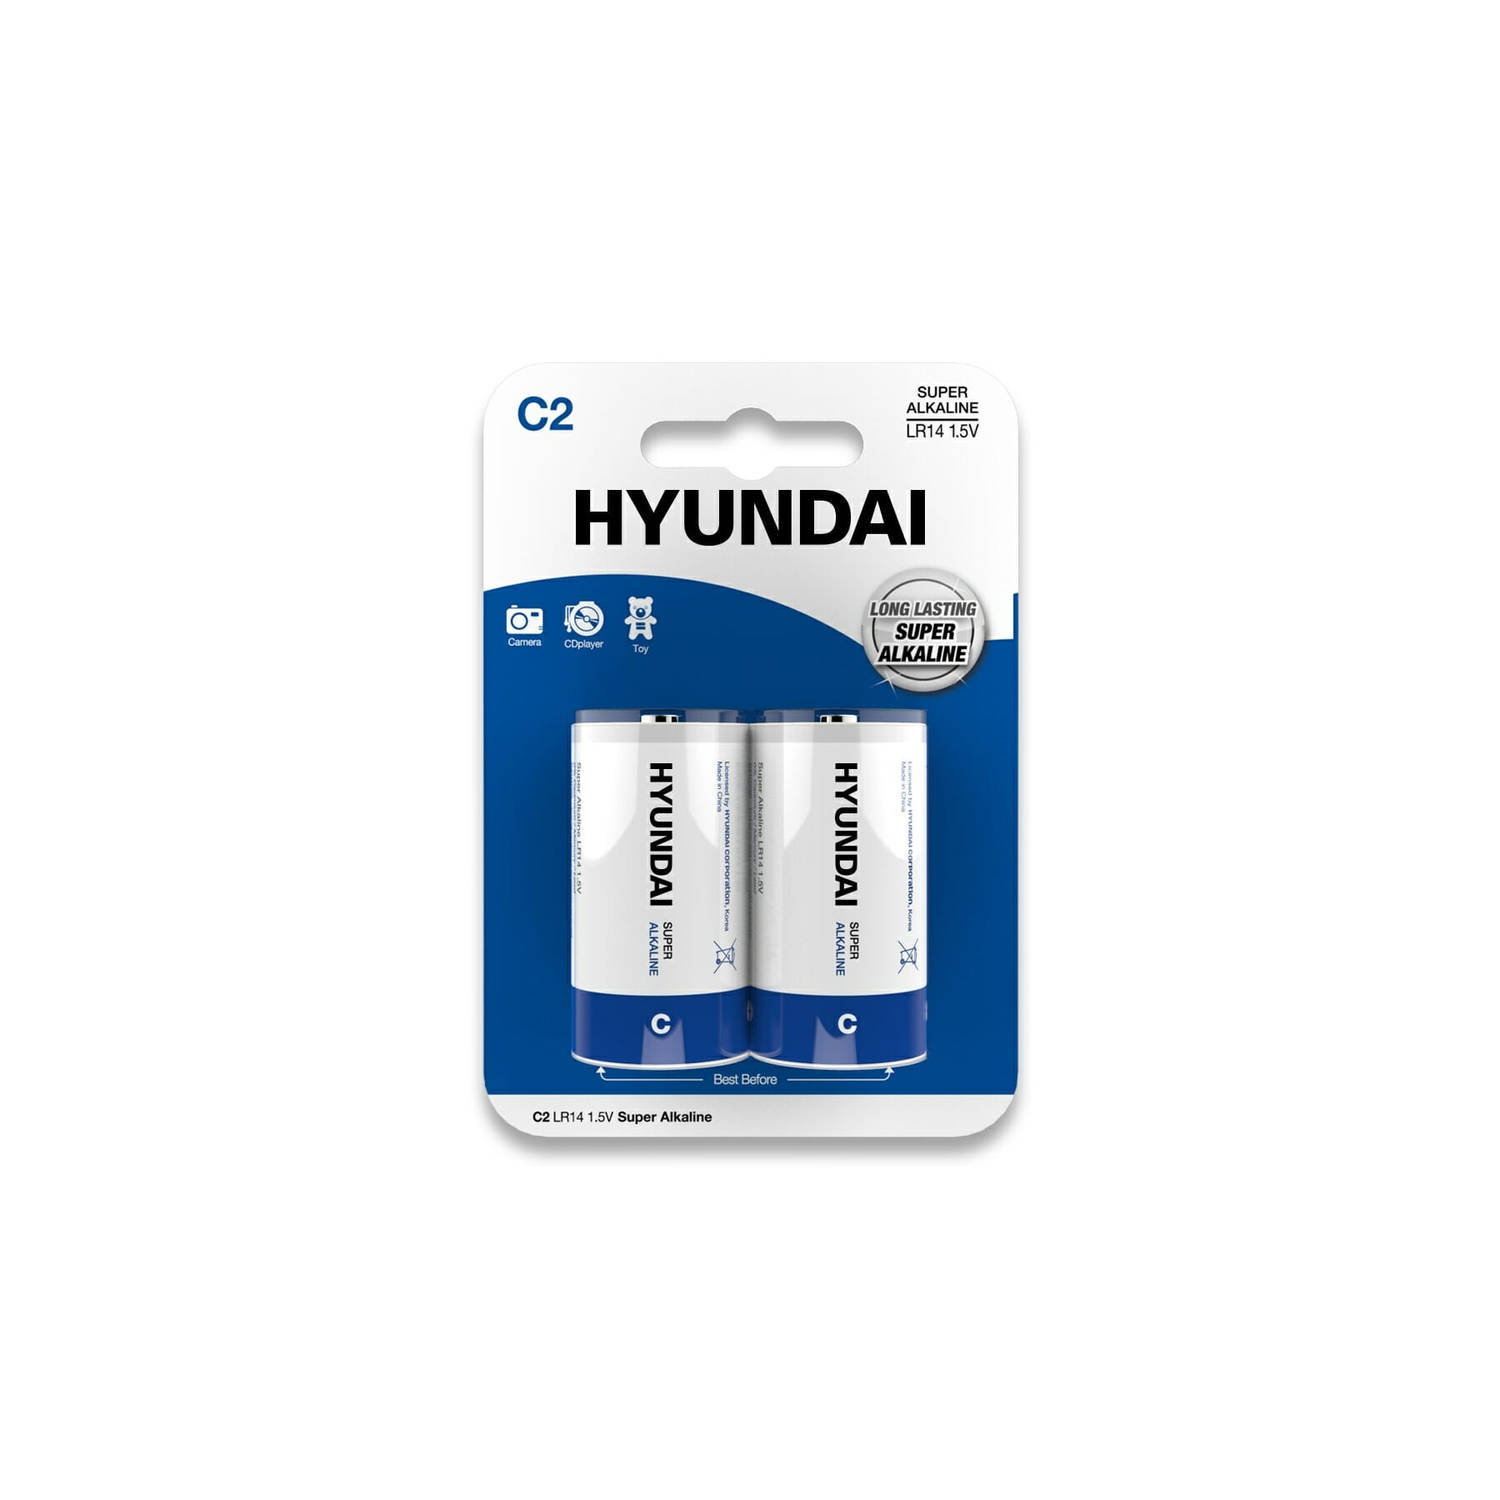 Hyundai Batteries - Super Alkaline C batterijen - 2 stuks